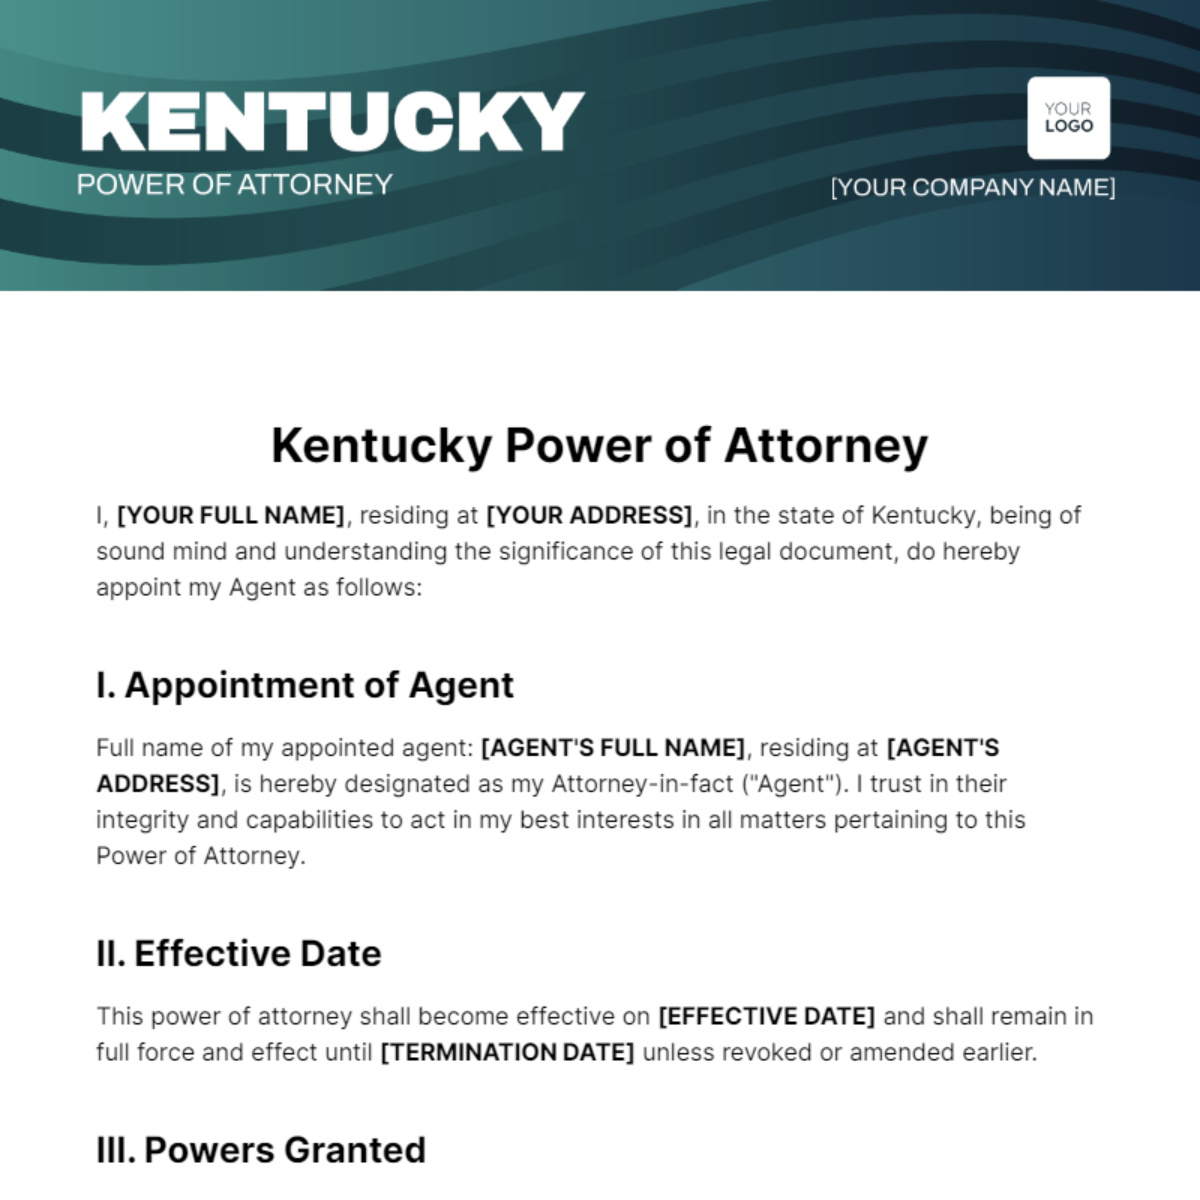 Kentucky Power of Attorney Template